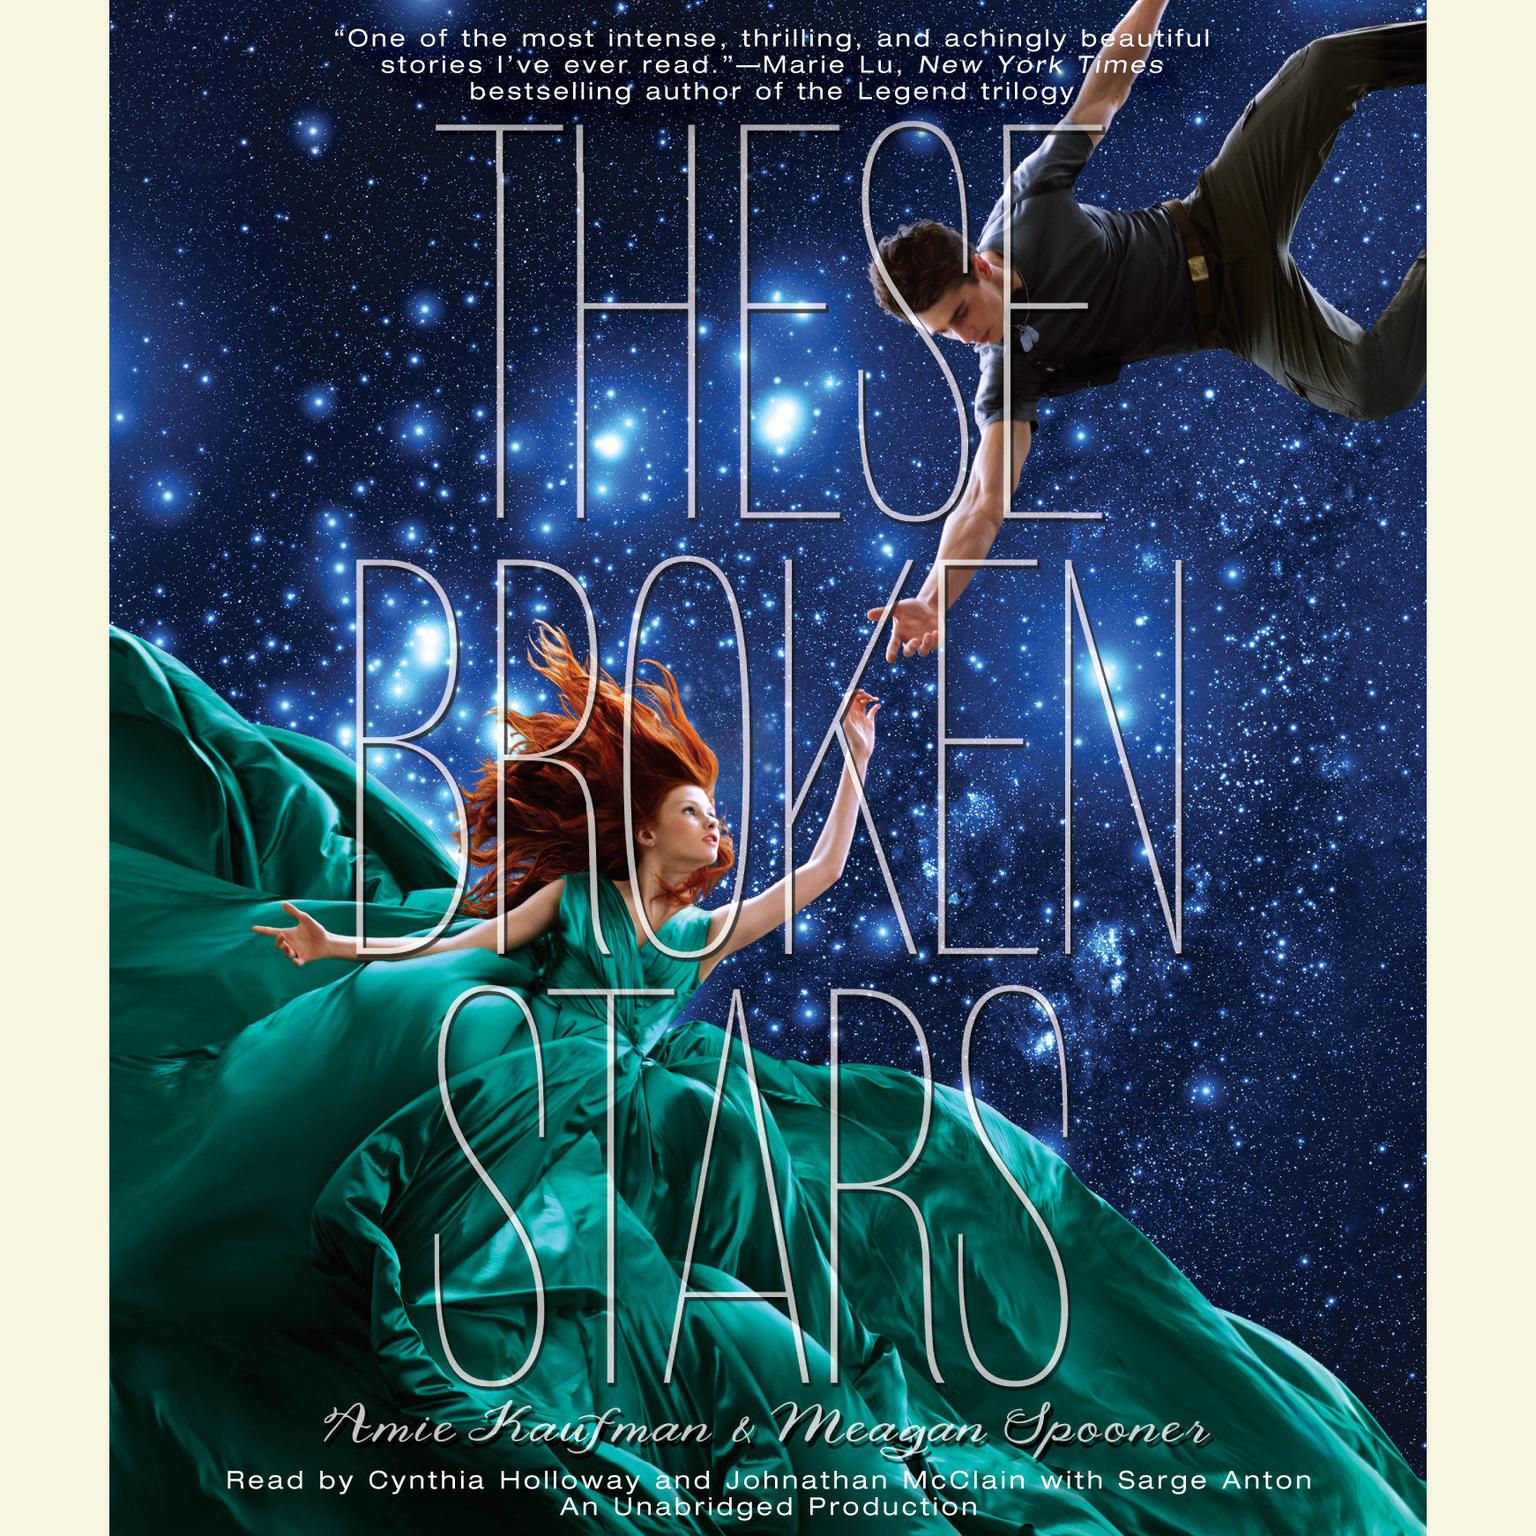 These Broken Stars Audiobook, by Amie Kaufman